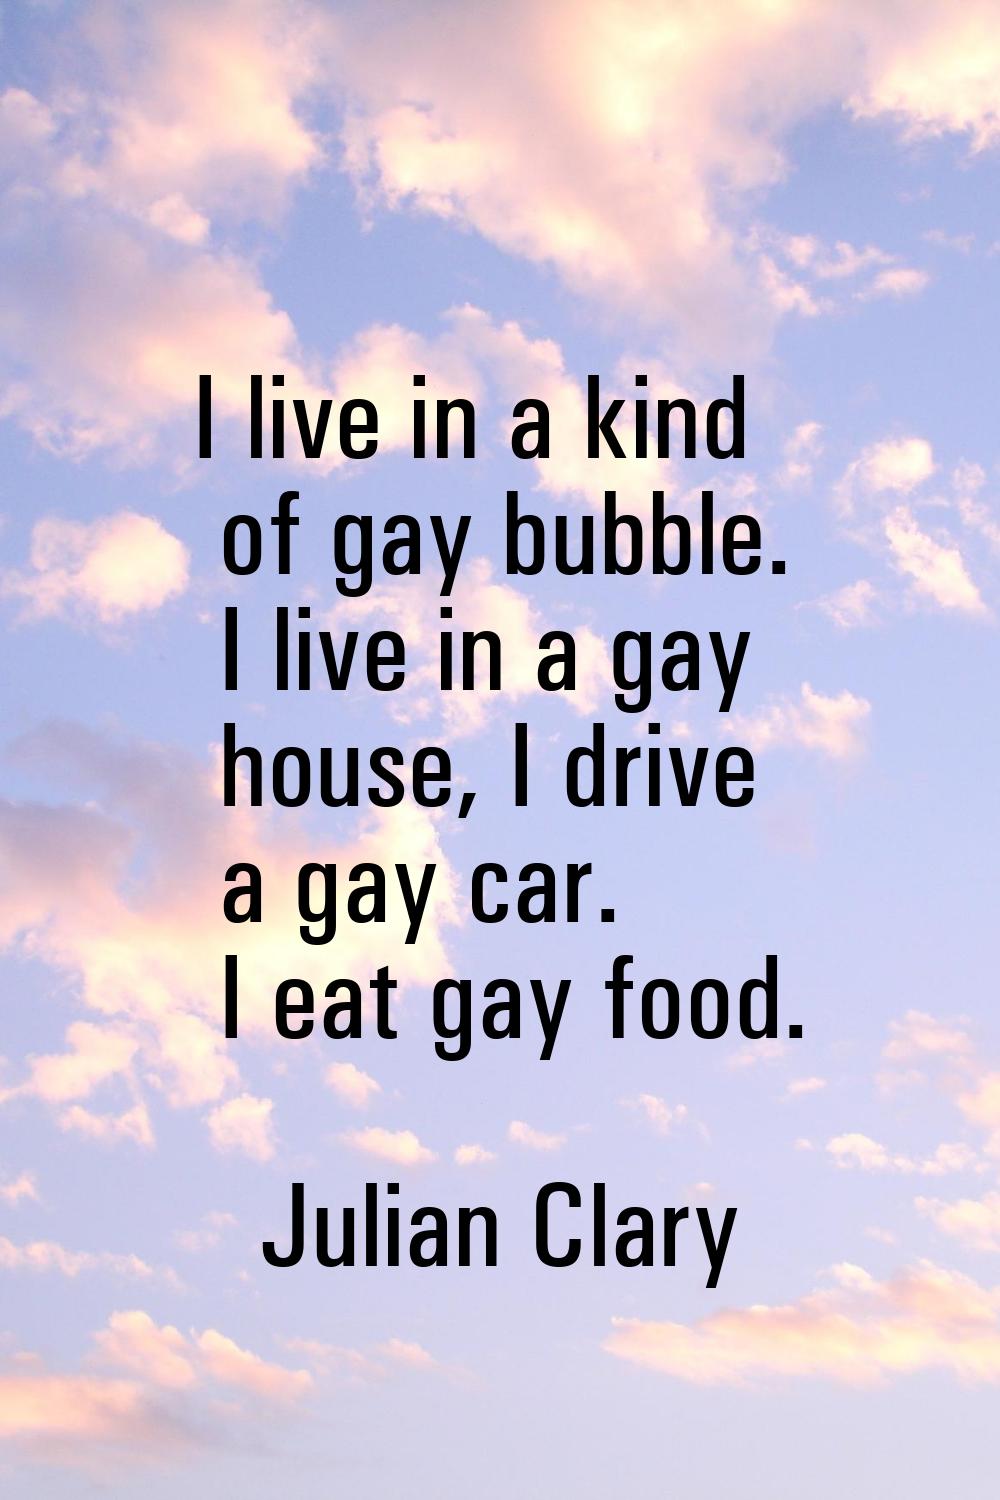 I live in a kind of gay bubble. I live in a gay house, I drive a gay car. I eat gay food.